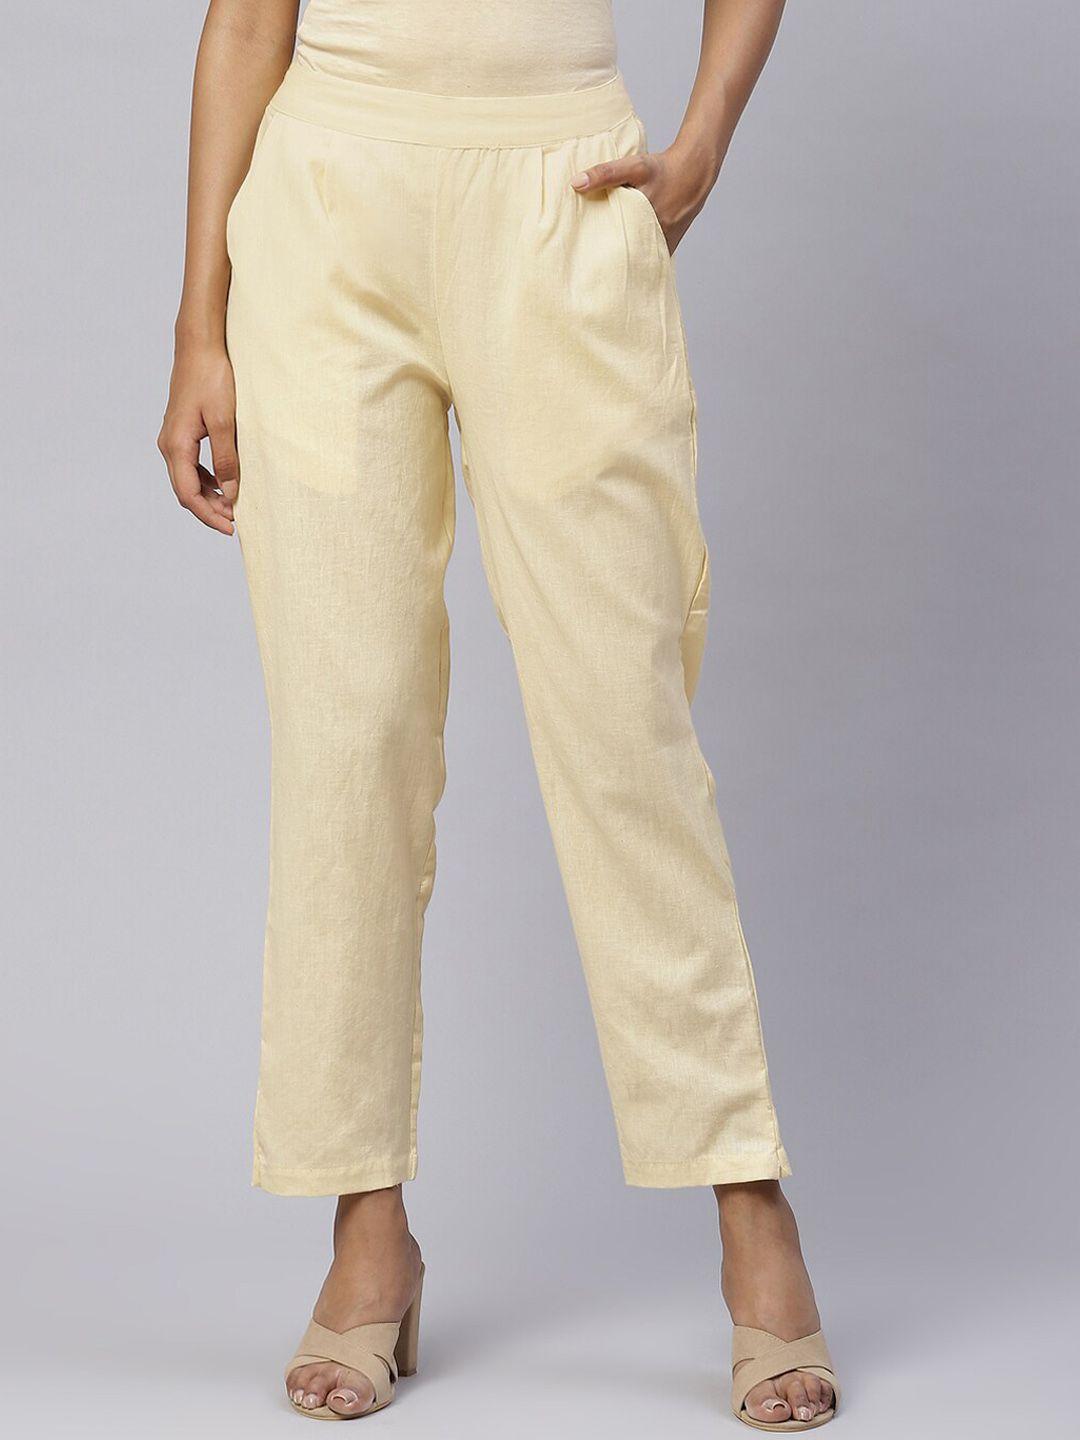 saart bunaai women cream-coloured solid cotton trousers